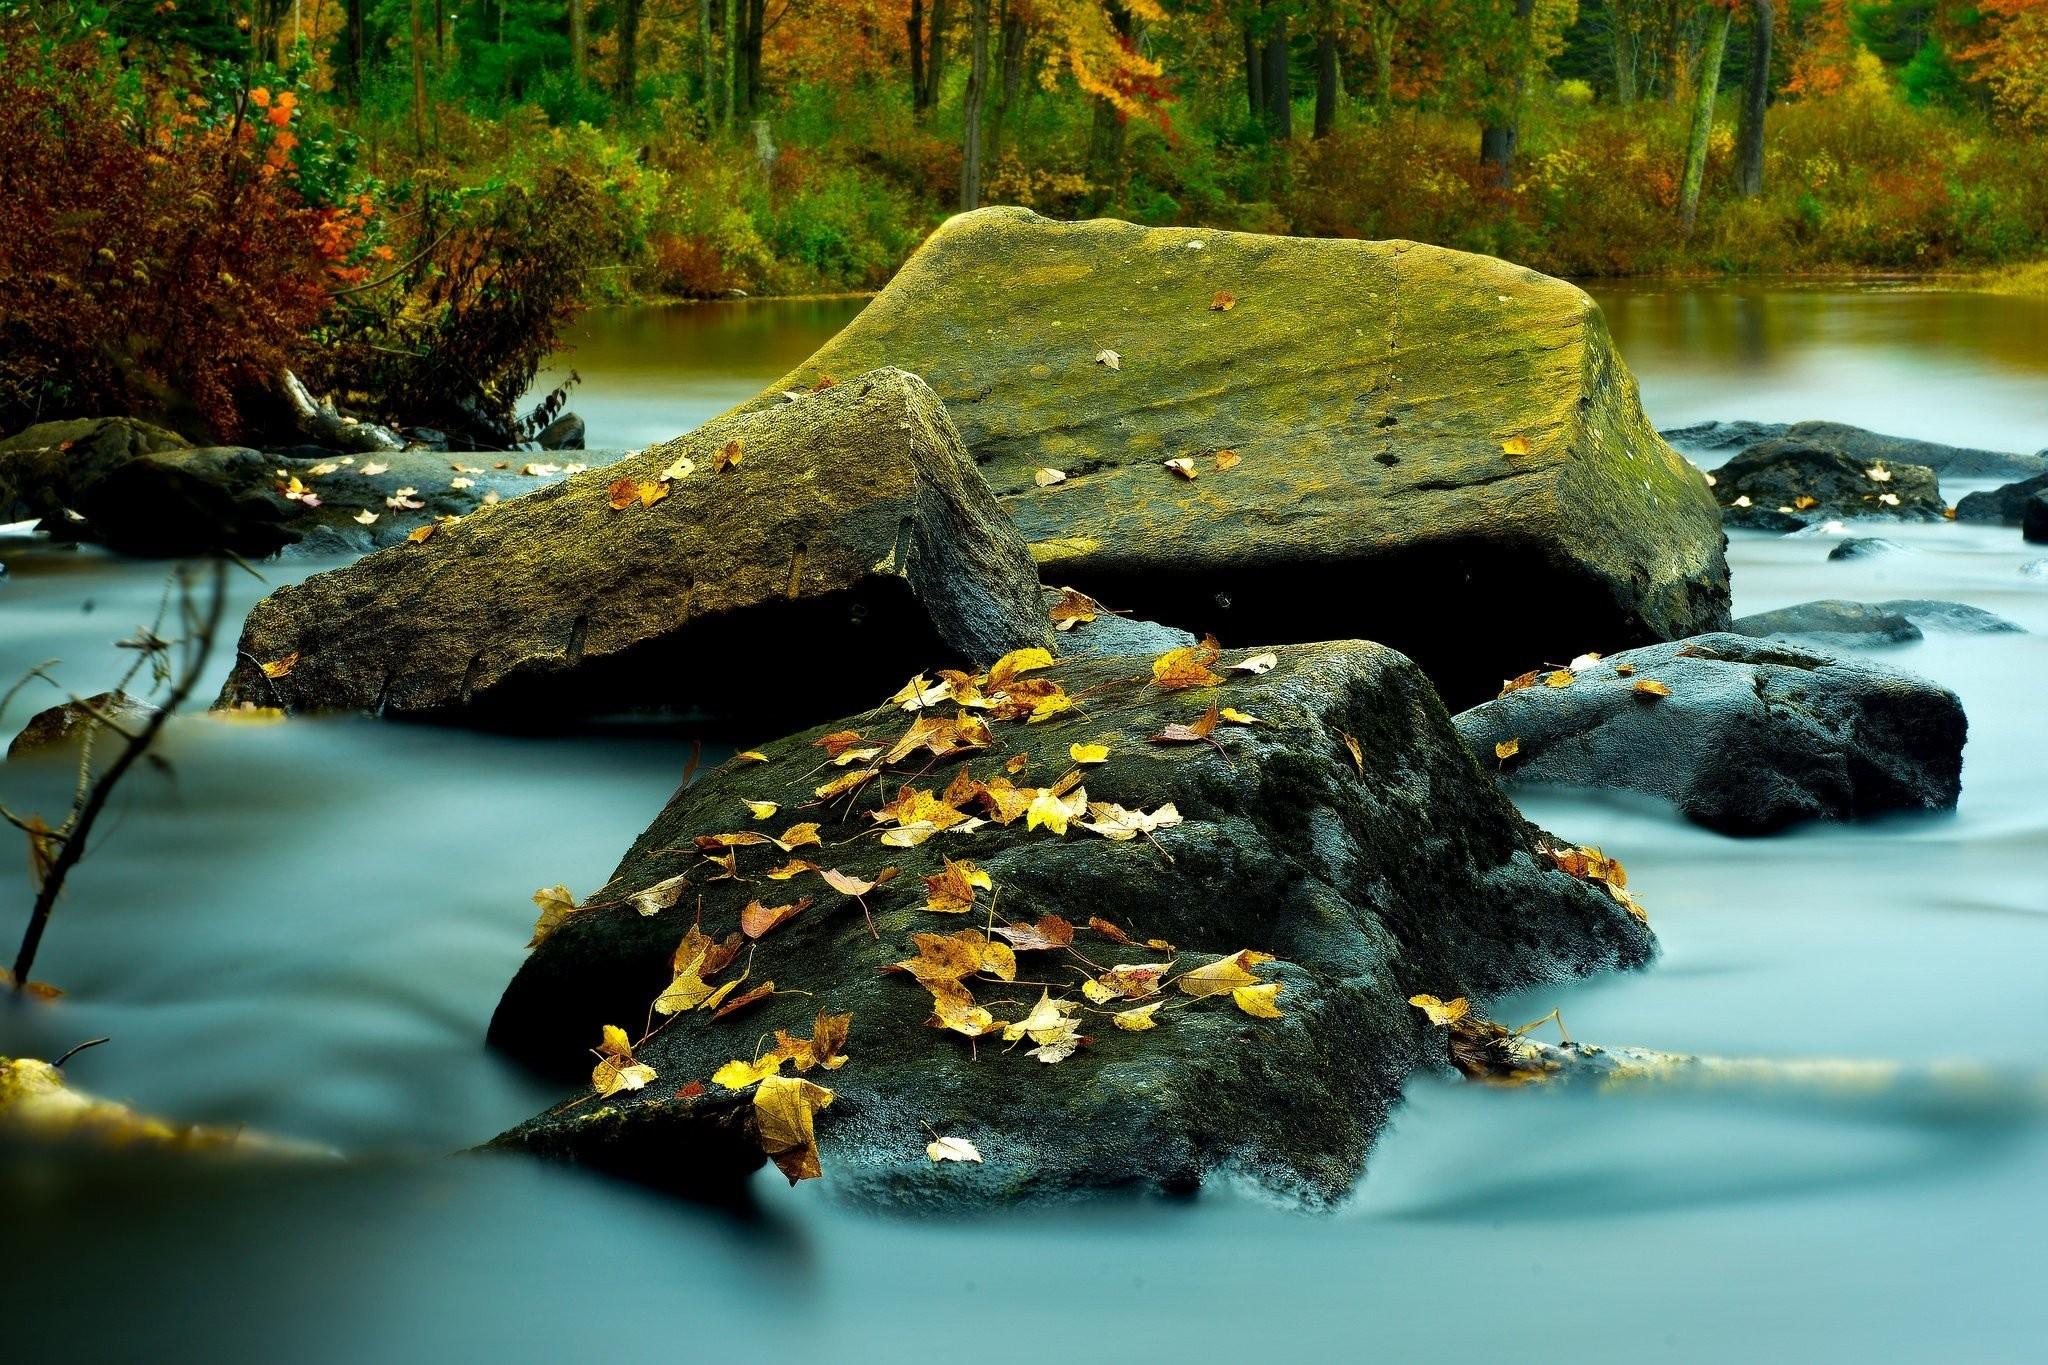 Amazing, Love, United, HD Landscape Image, River, States